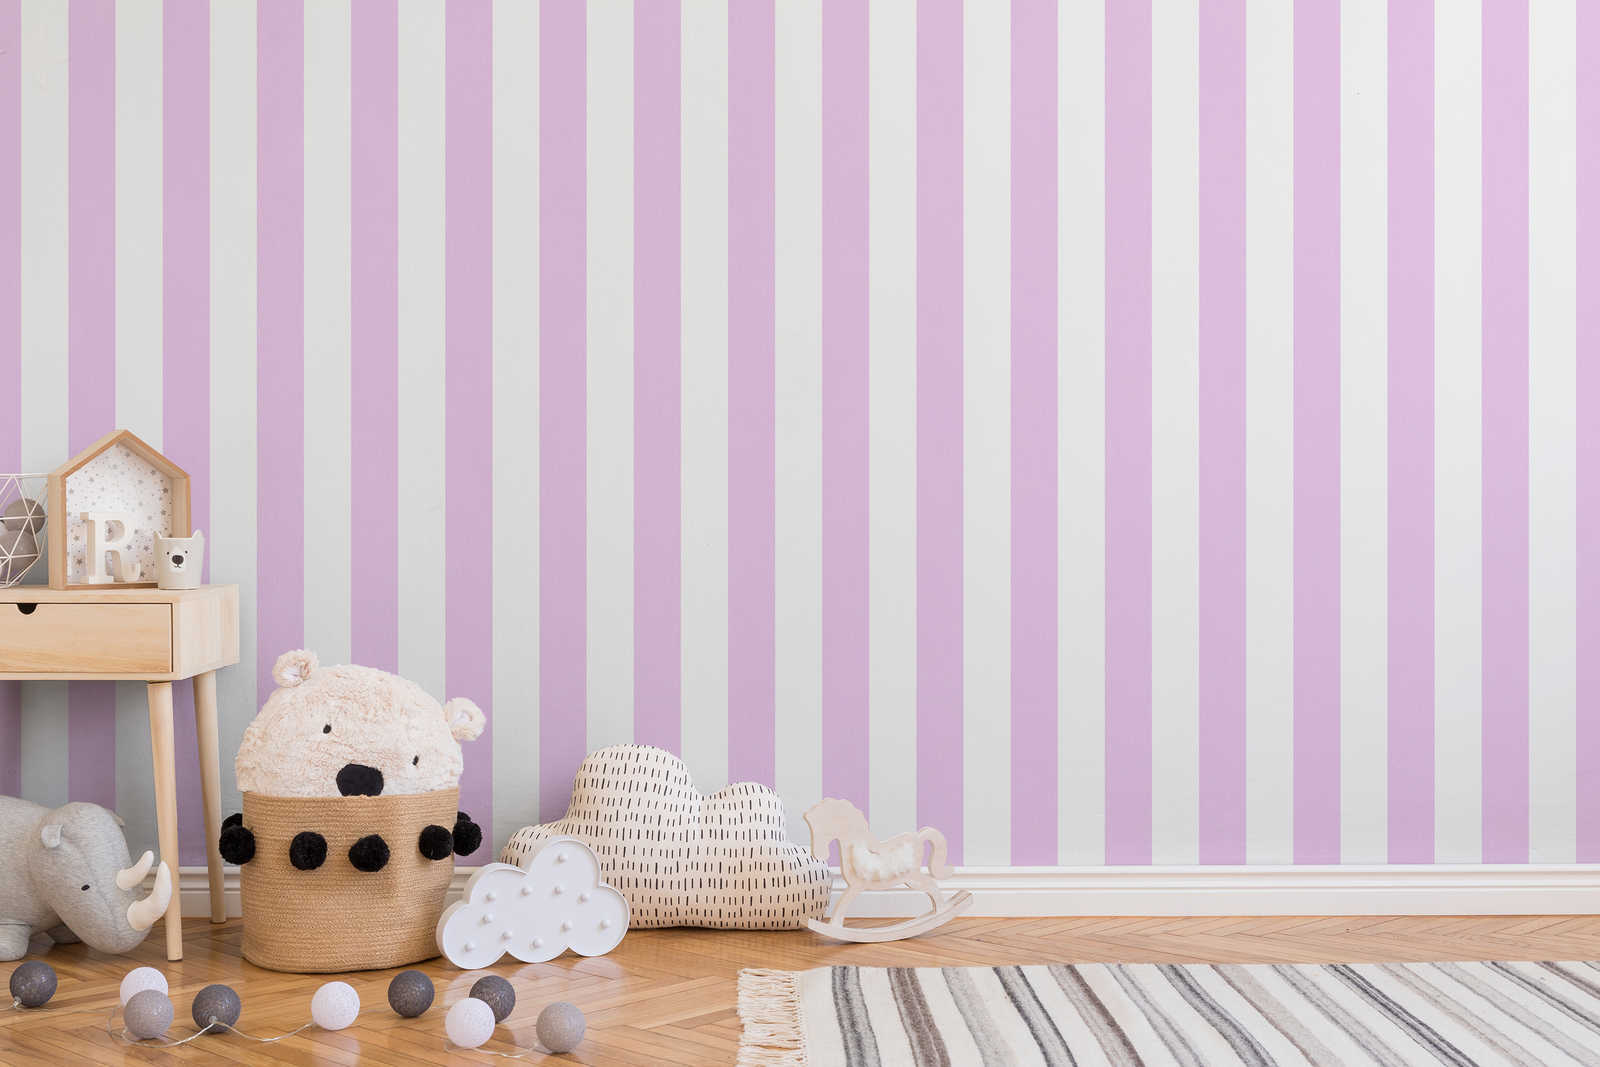             Papel pintado habitación infantil niñas rayas verticales - rosa, blanco
        